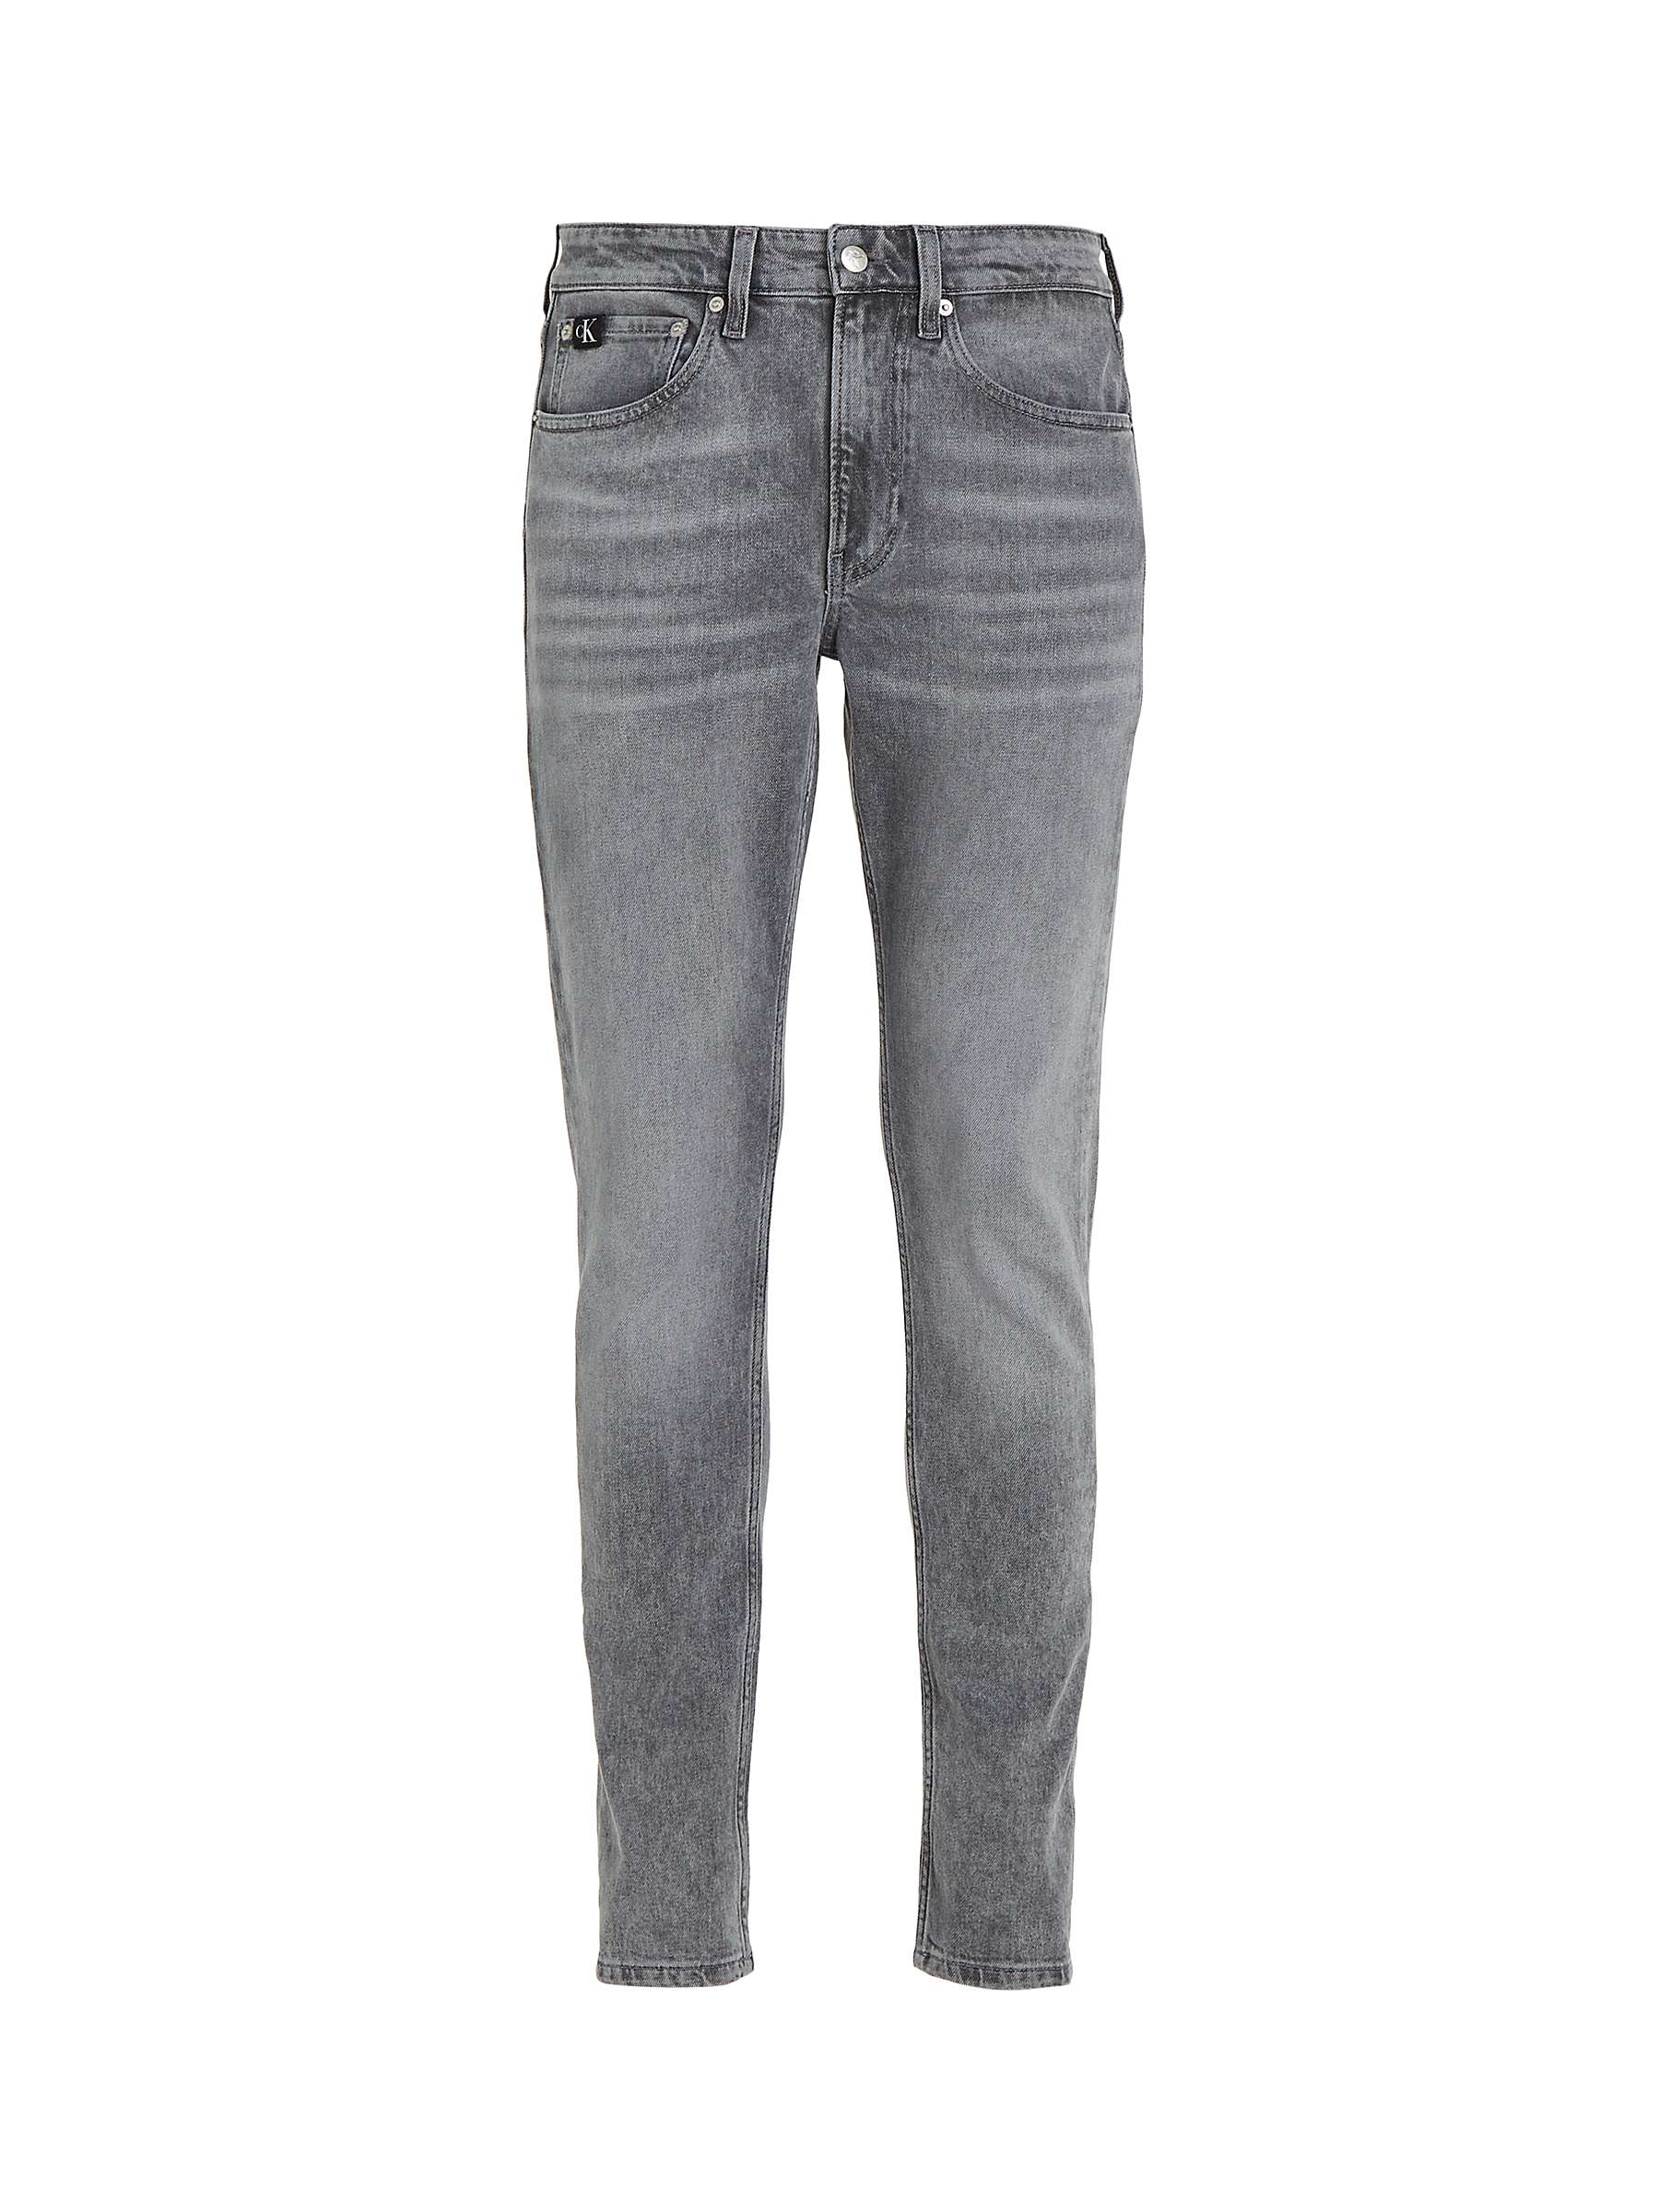 Calvin Klein Slim Tapered Jeans, Grey at John Lewis & Partners